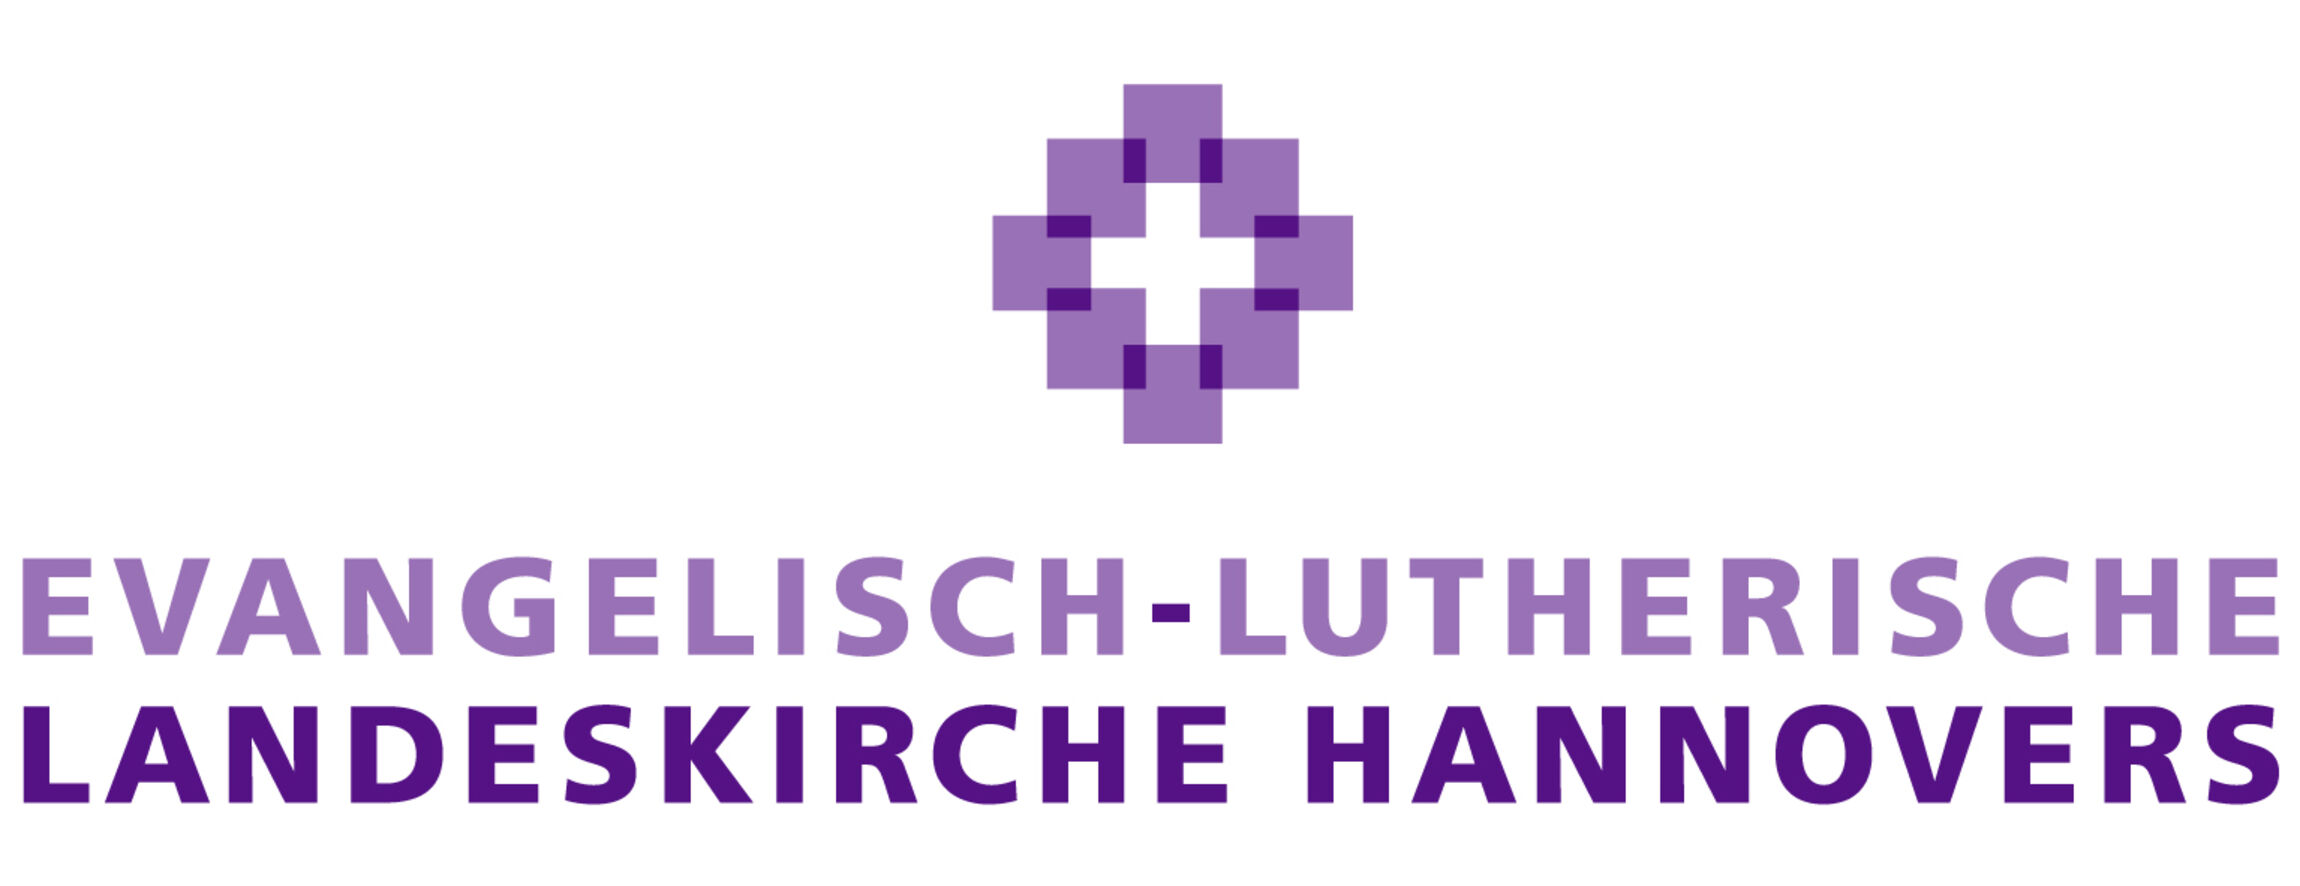 Logo Landeskirchenamt Wortbildmarke Version 2